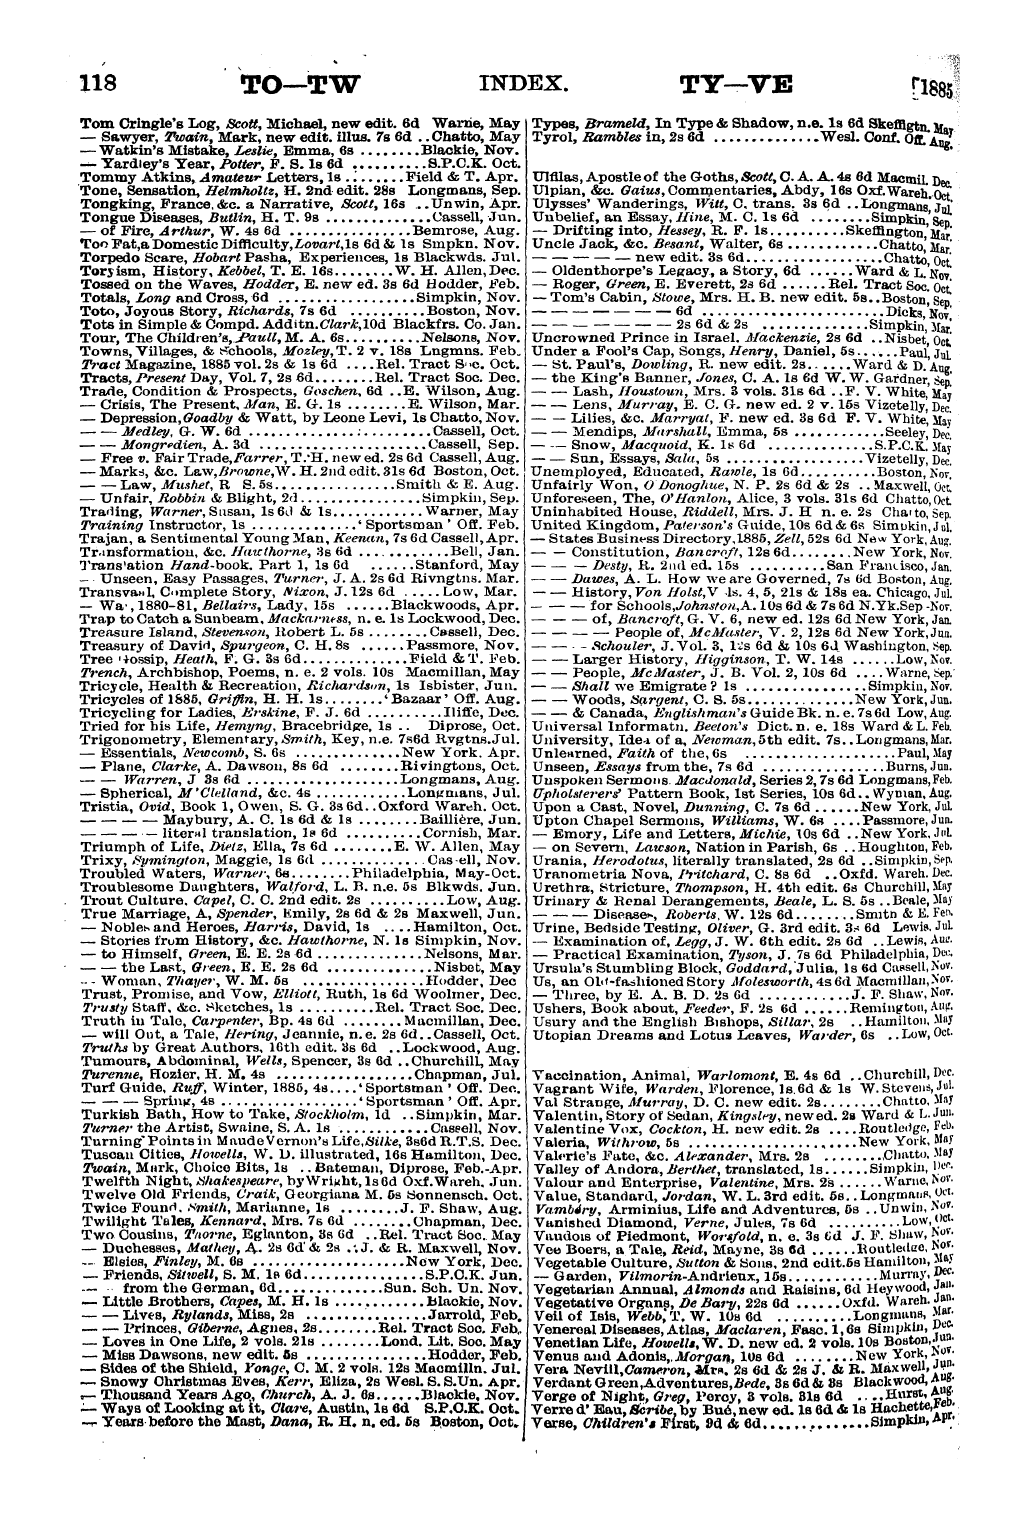 Publishers’ Circular (1880-1890): jS F Y, 1st edition: 120